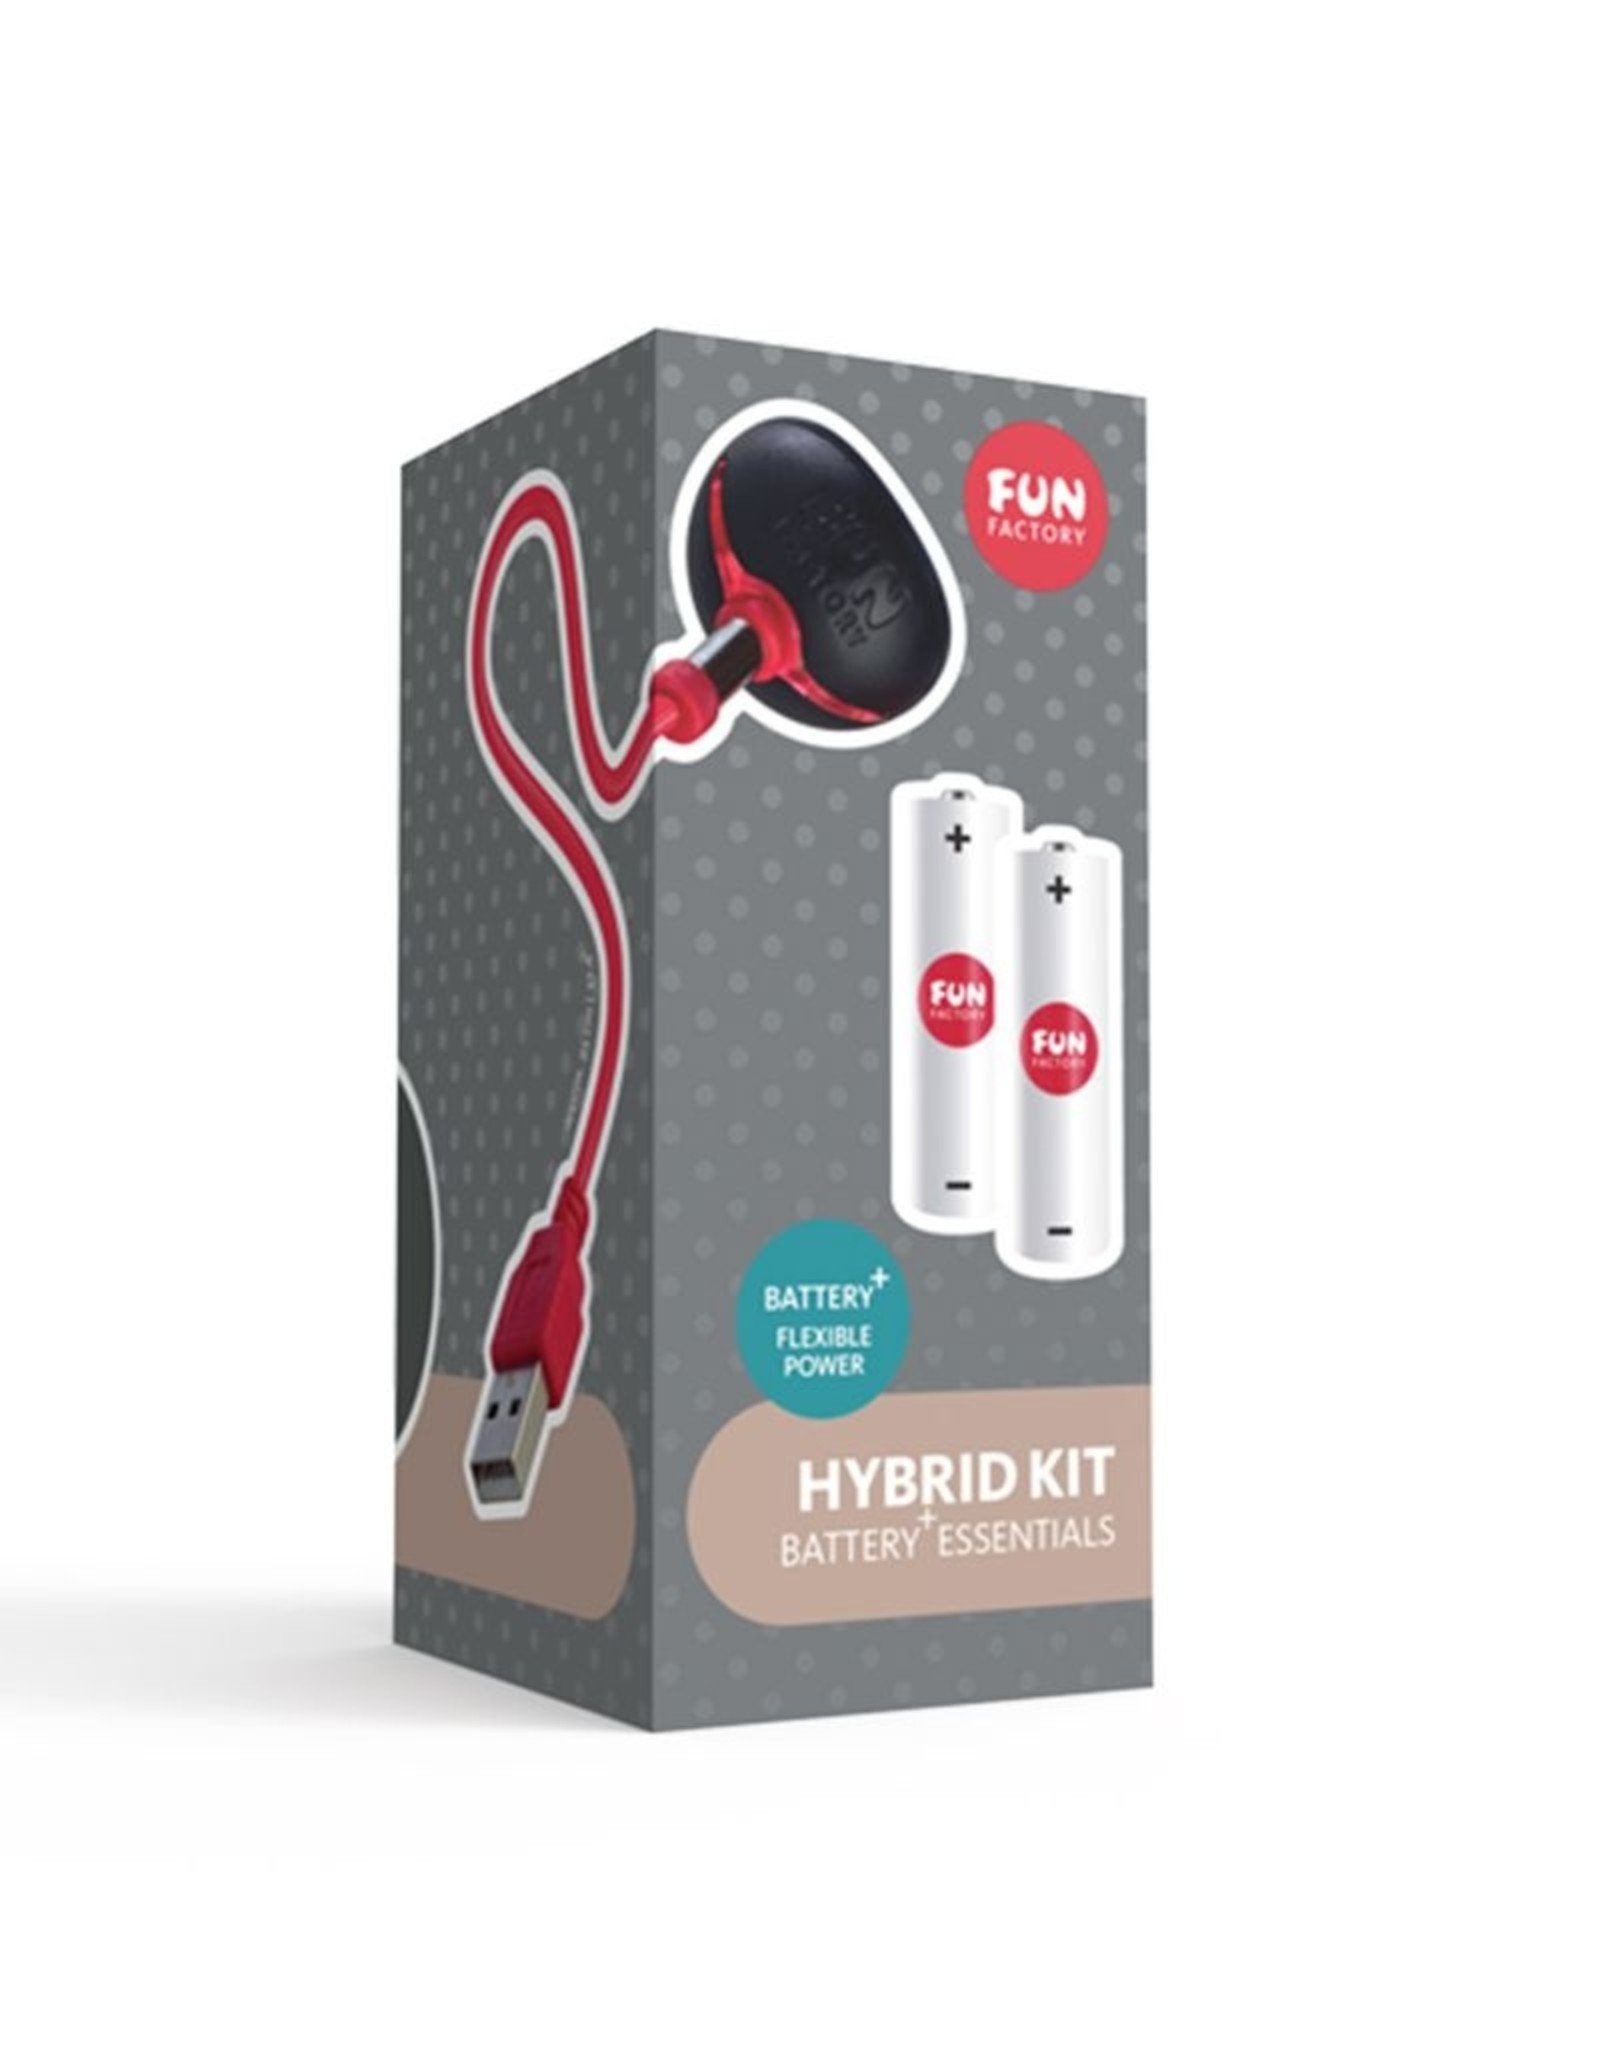 Fun Factory Hybrid Kit Battery Plus Toys